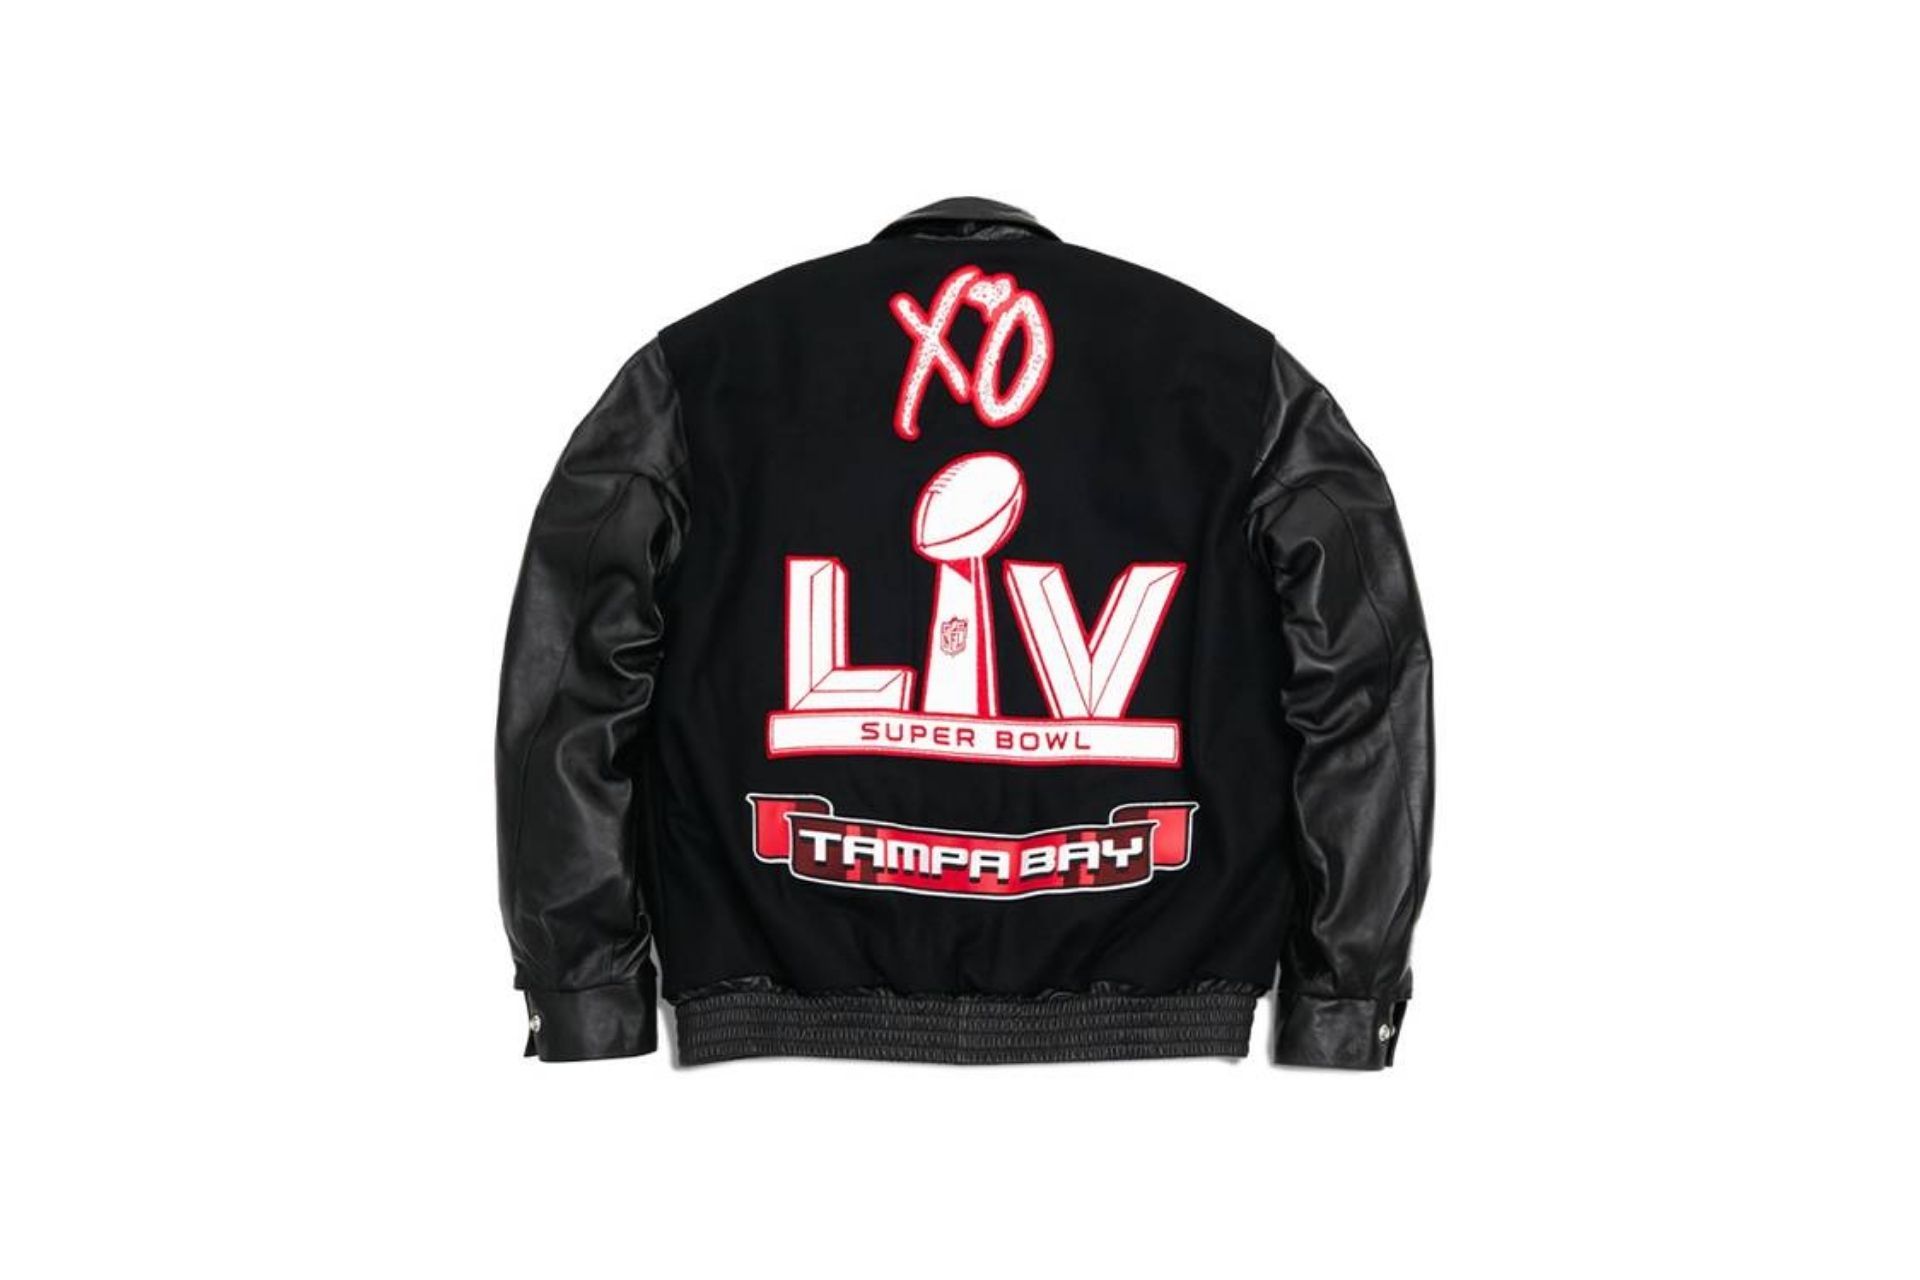 UpscaleHype - The Weeknd wears Louis Vuitton Millionaire